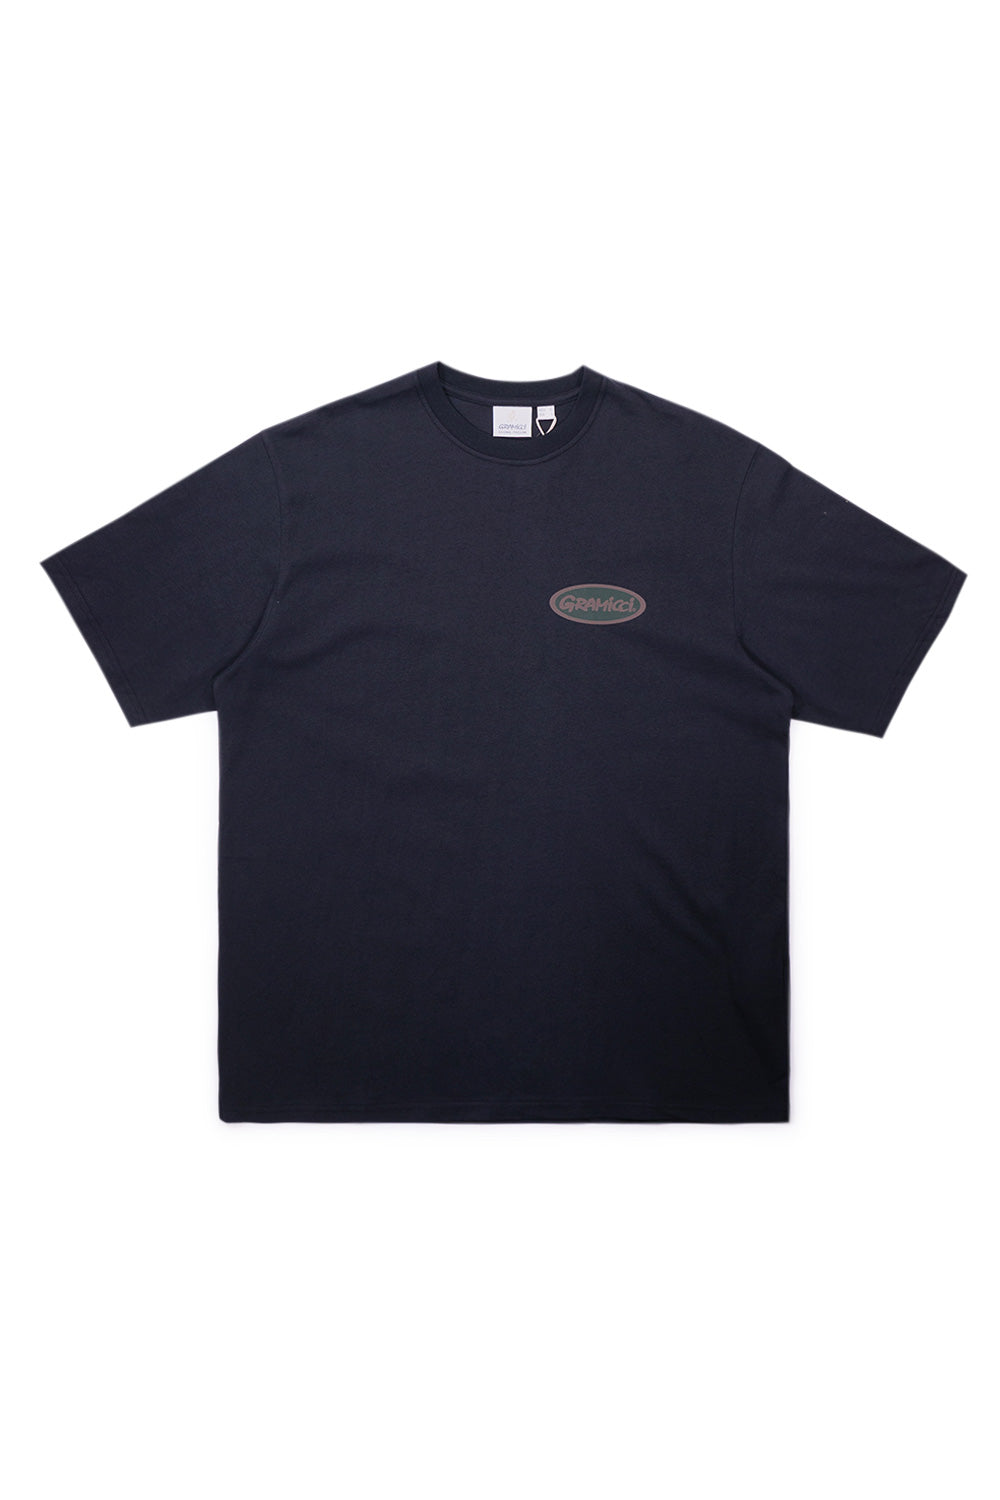 Gramicci Oval T-Shirt Vintage Black - BONKERS